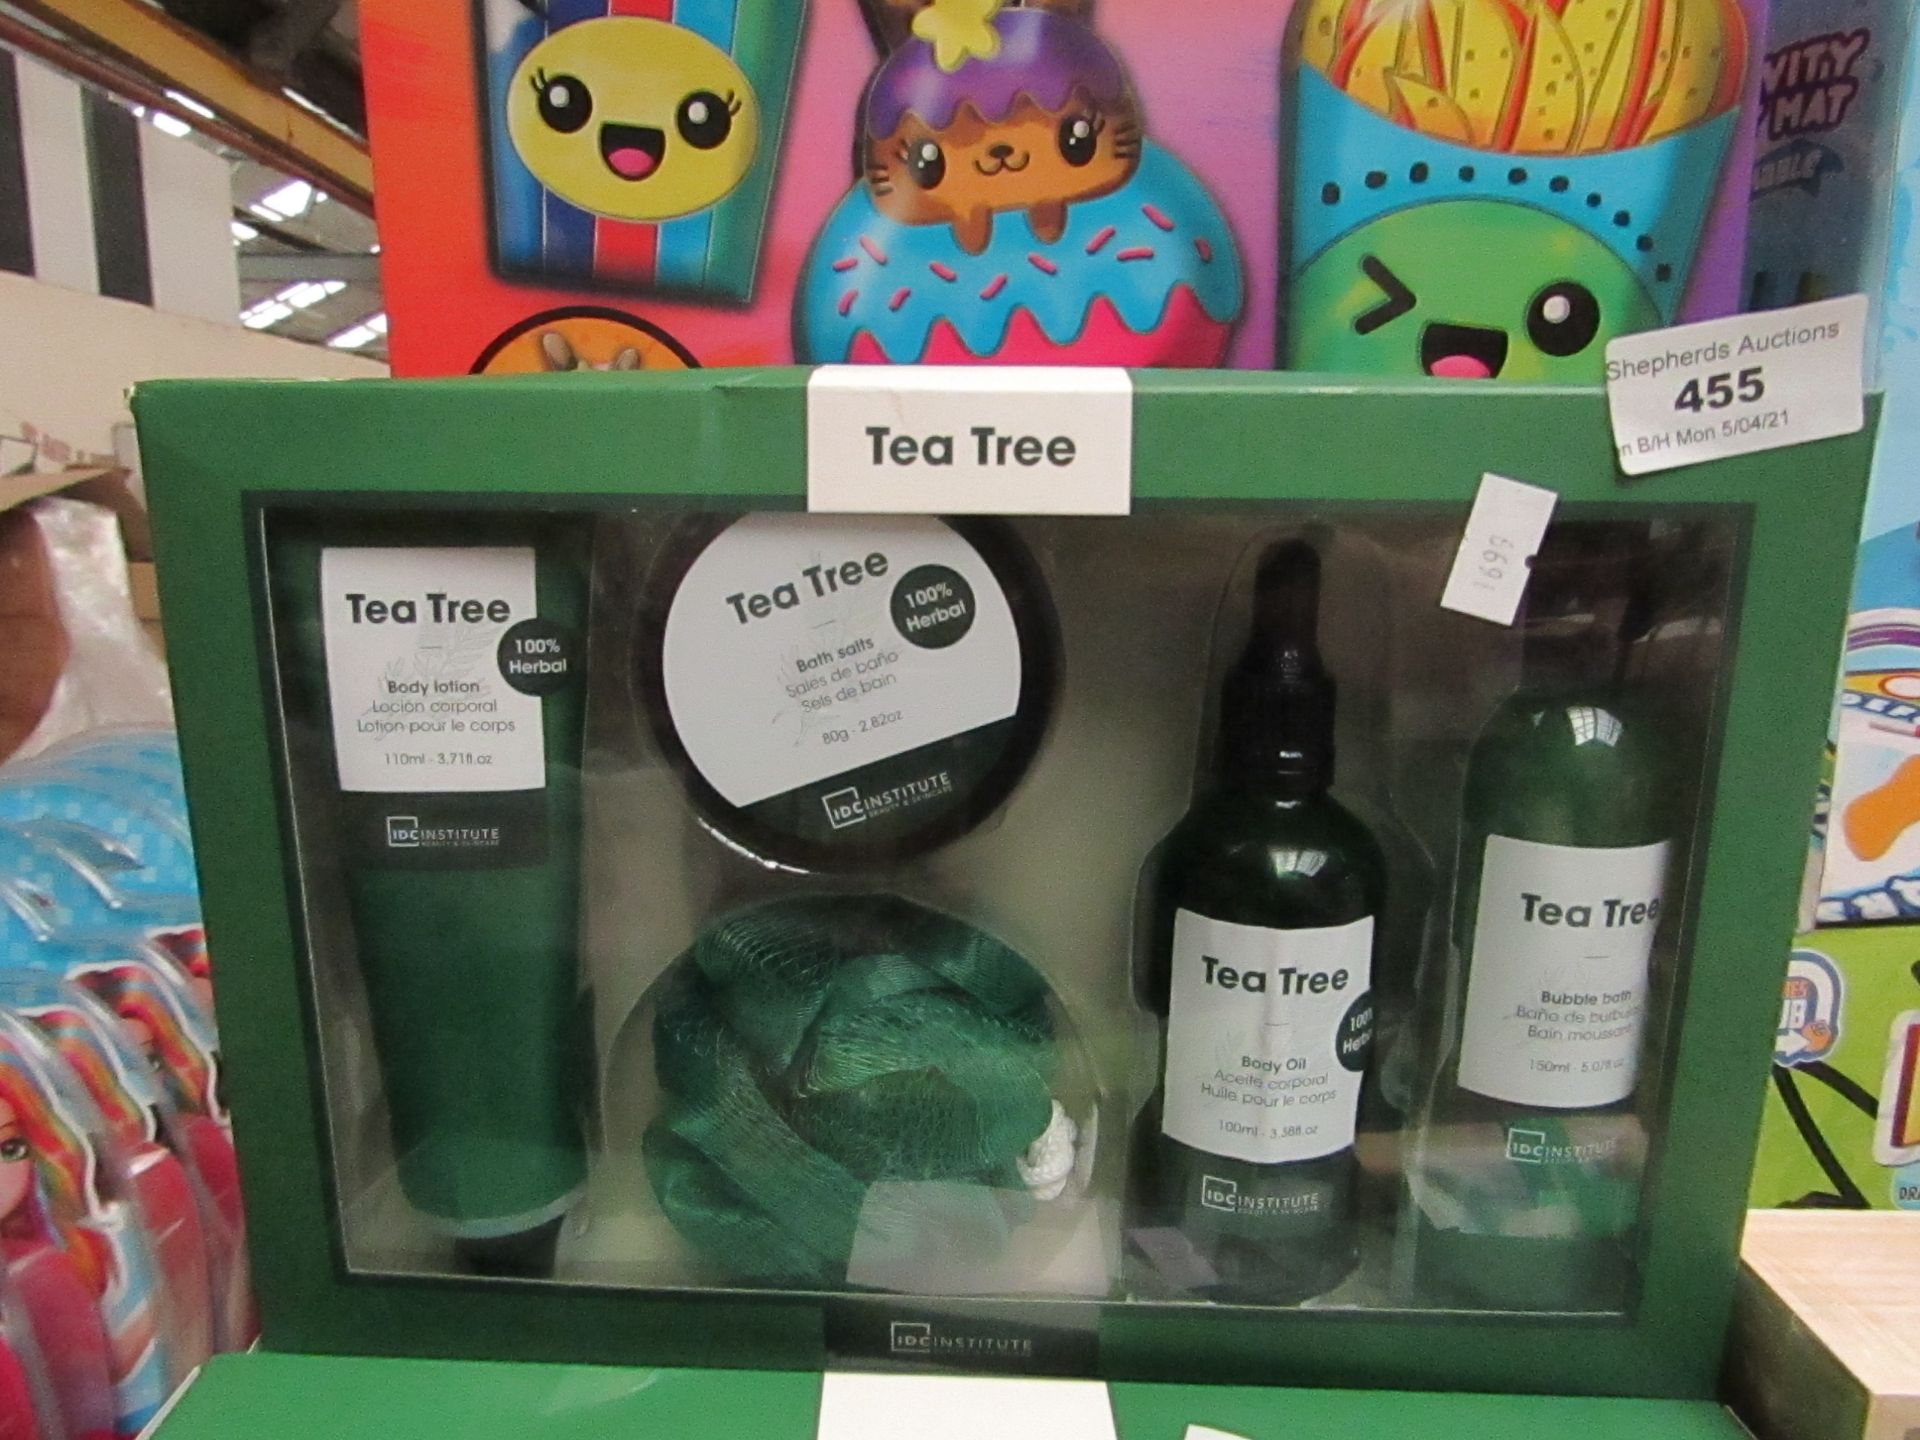 IDC institute tea tree Gift set, includes Body Lotion, Bath Oil, Bubble Bath, Bath salts and Sponge,